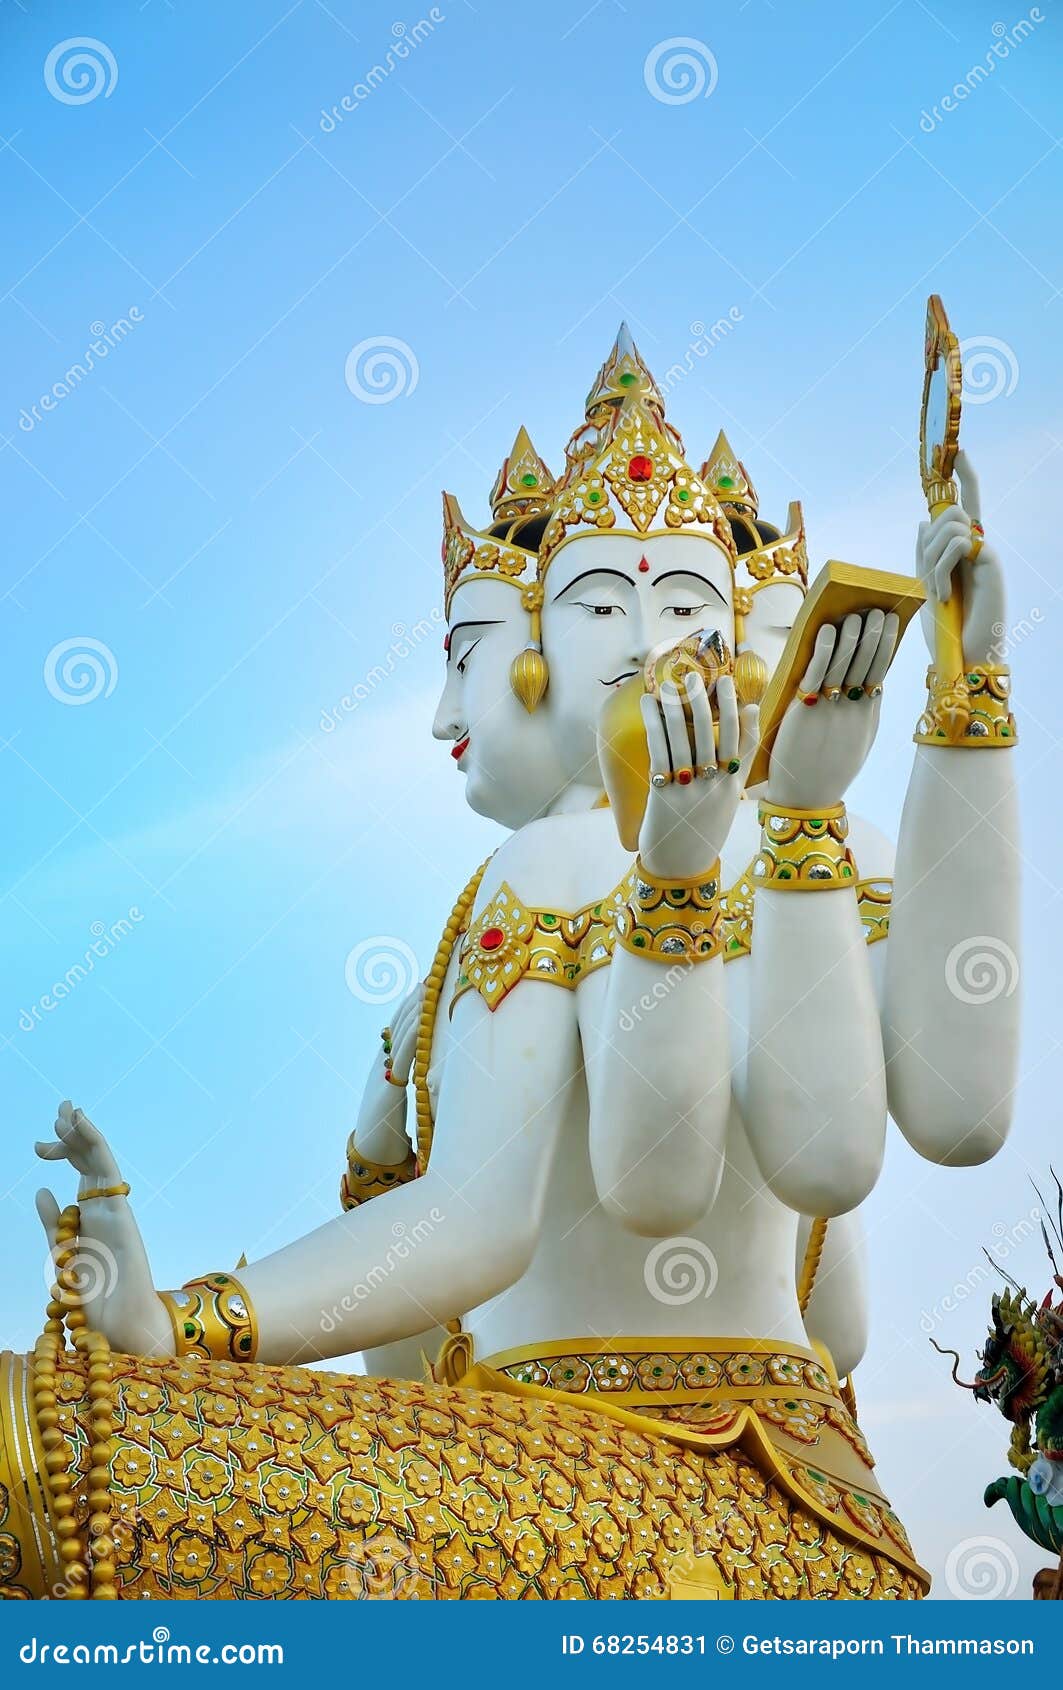 Brahma Statue Lord of Hindu Indian Culture Stock Image - Image of hidu ...